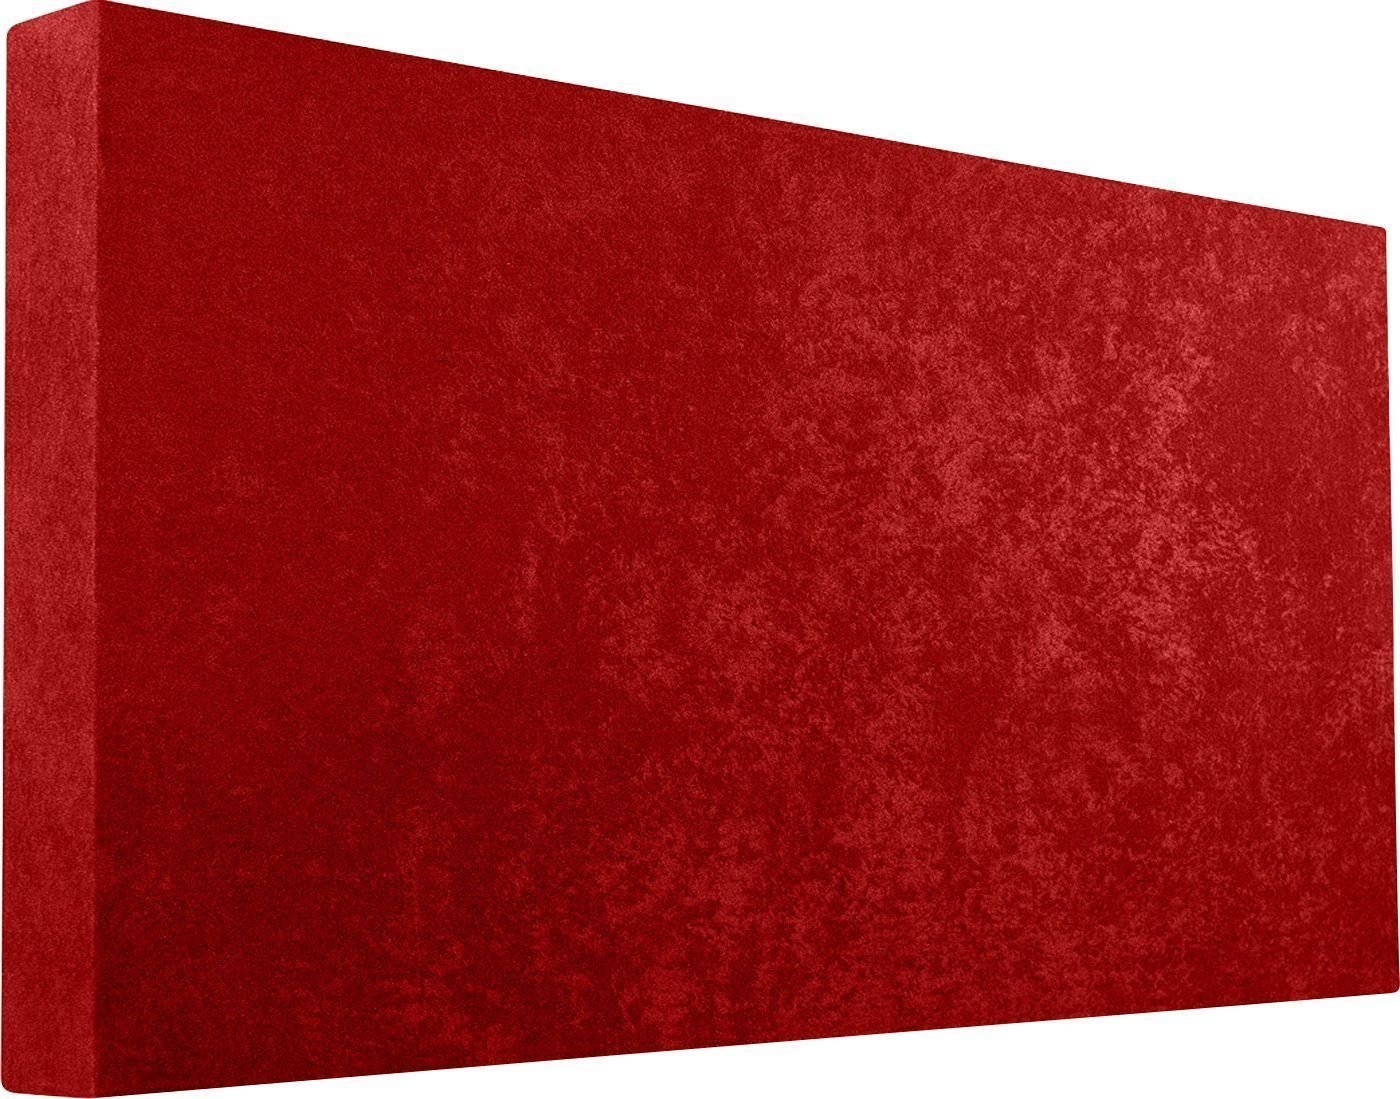 Chłonny panel z drewna Mega Acoustic Fiberstandard120 Czerwony